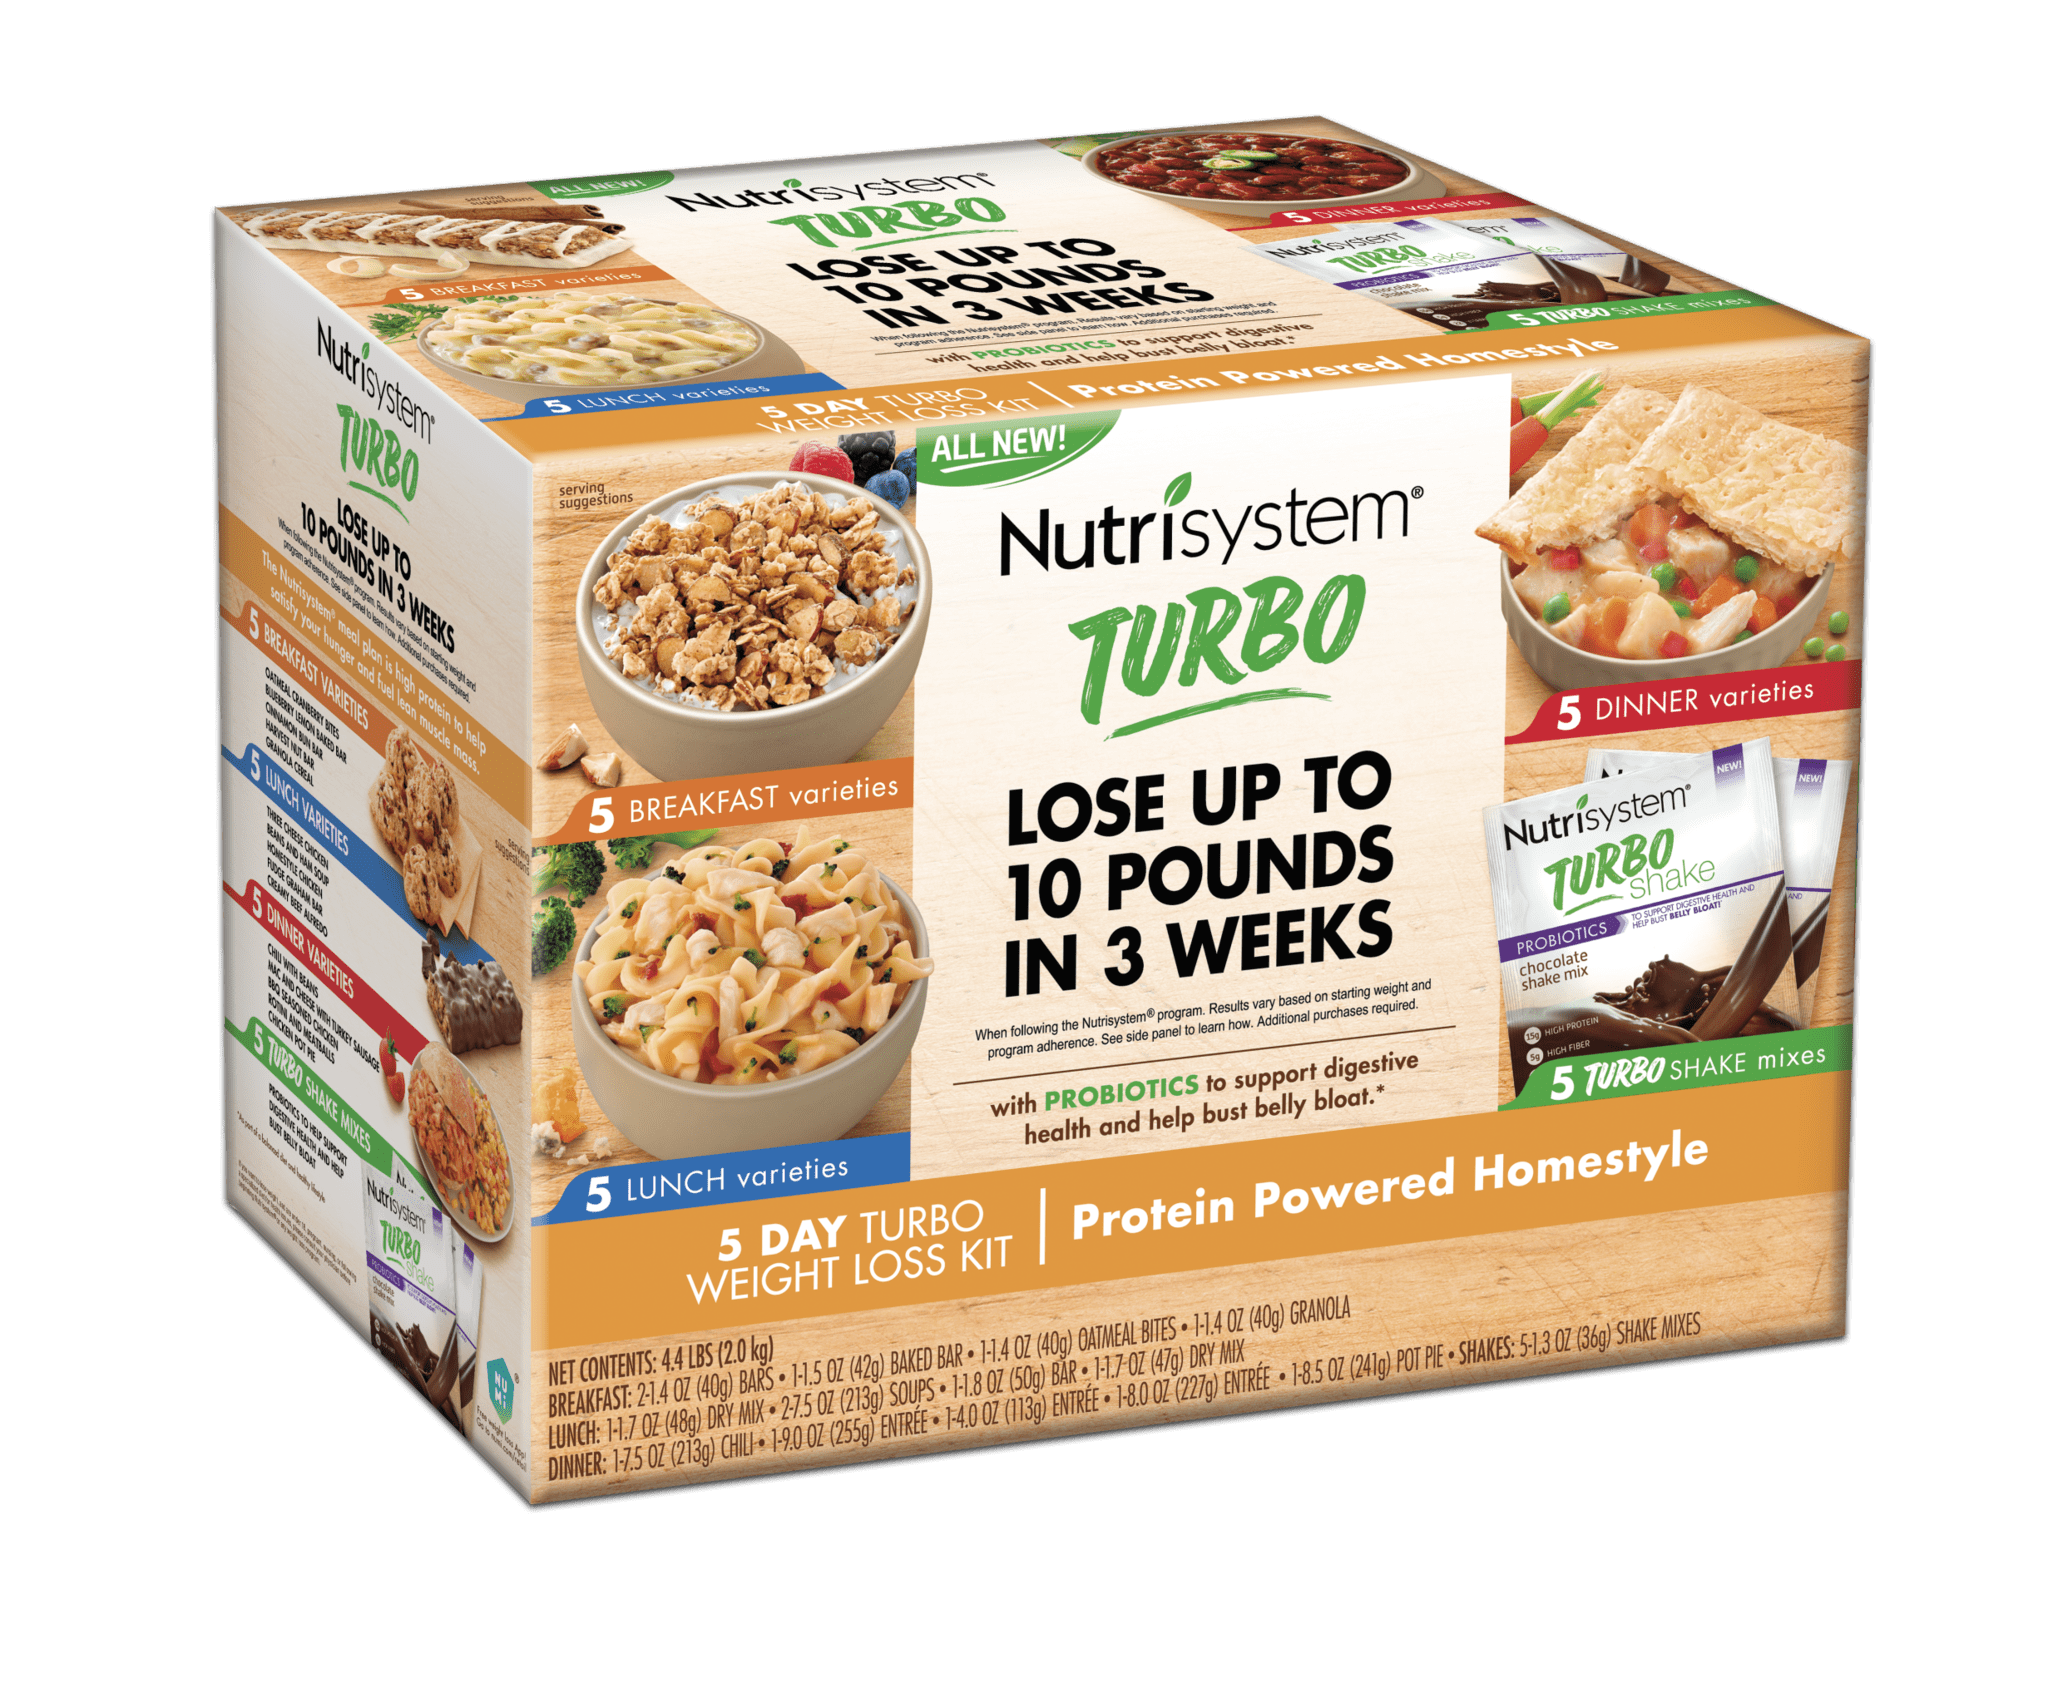 NutriSystem NutriCrush Weight Loss Shake Review